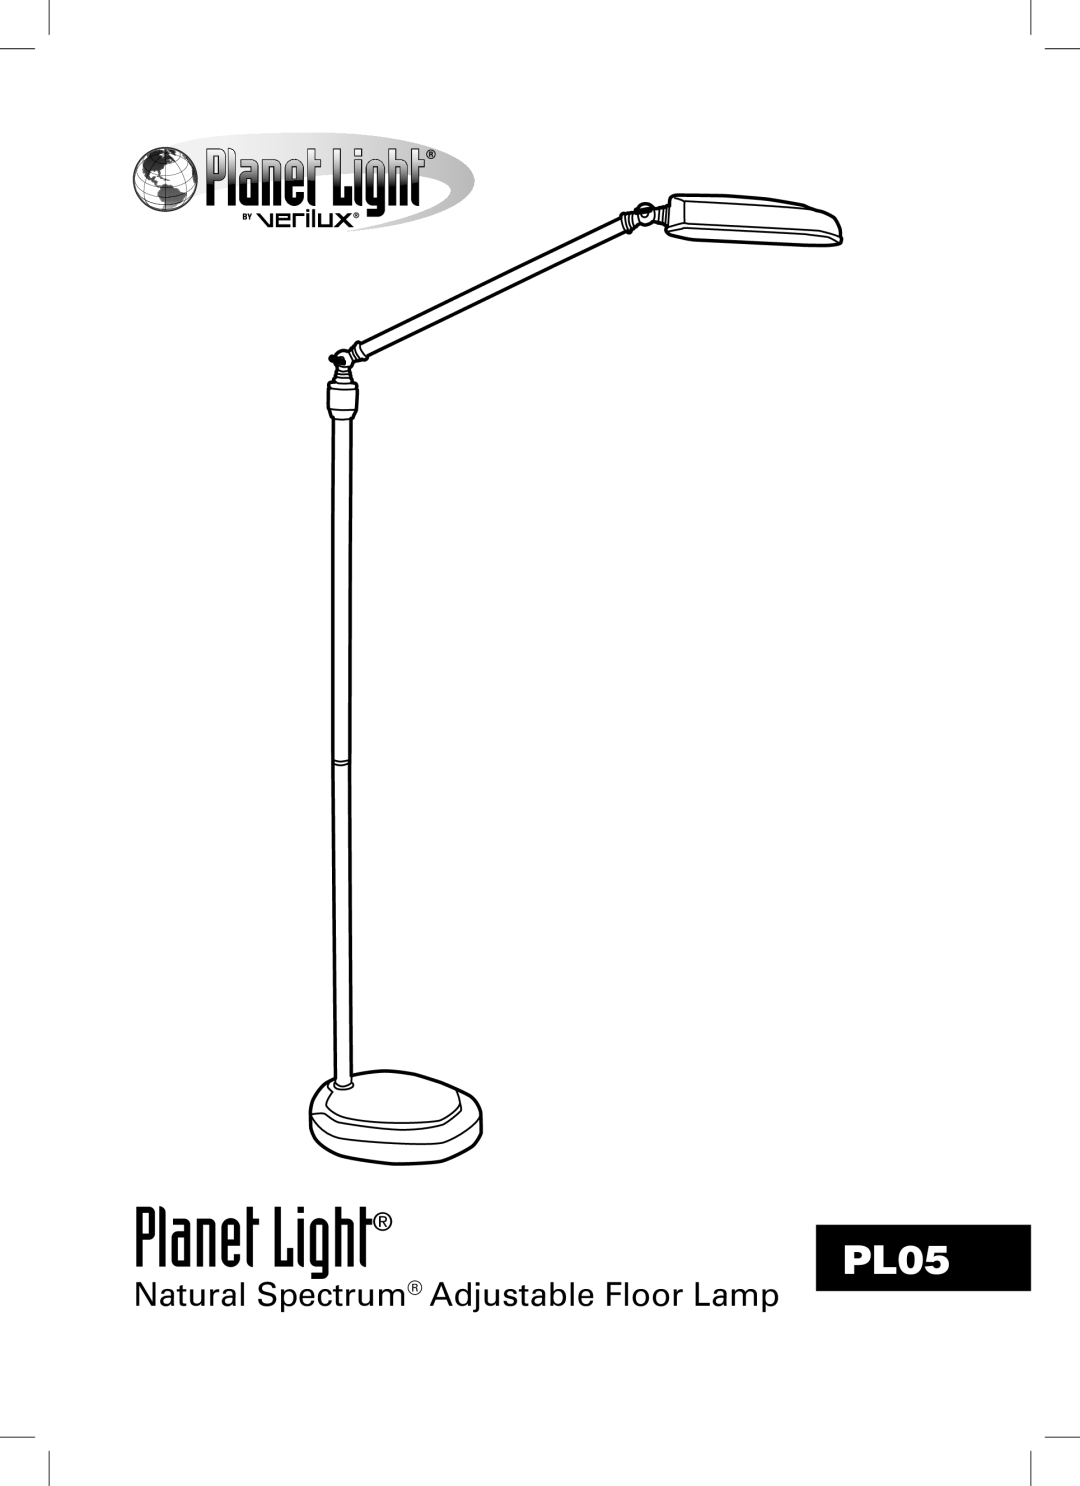 Verilux PL05 manual Planet Light, Natural Spectrum Adjustable Floor Lamp 